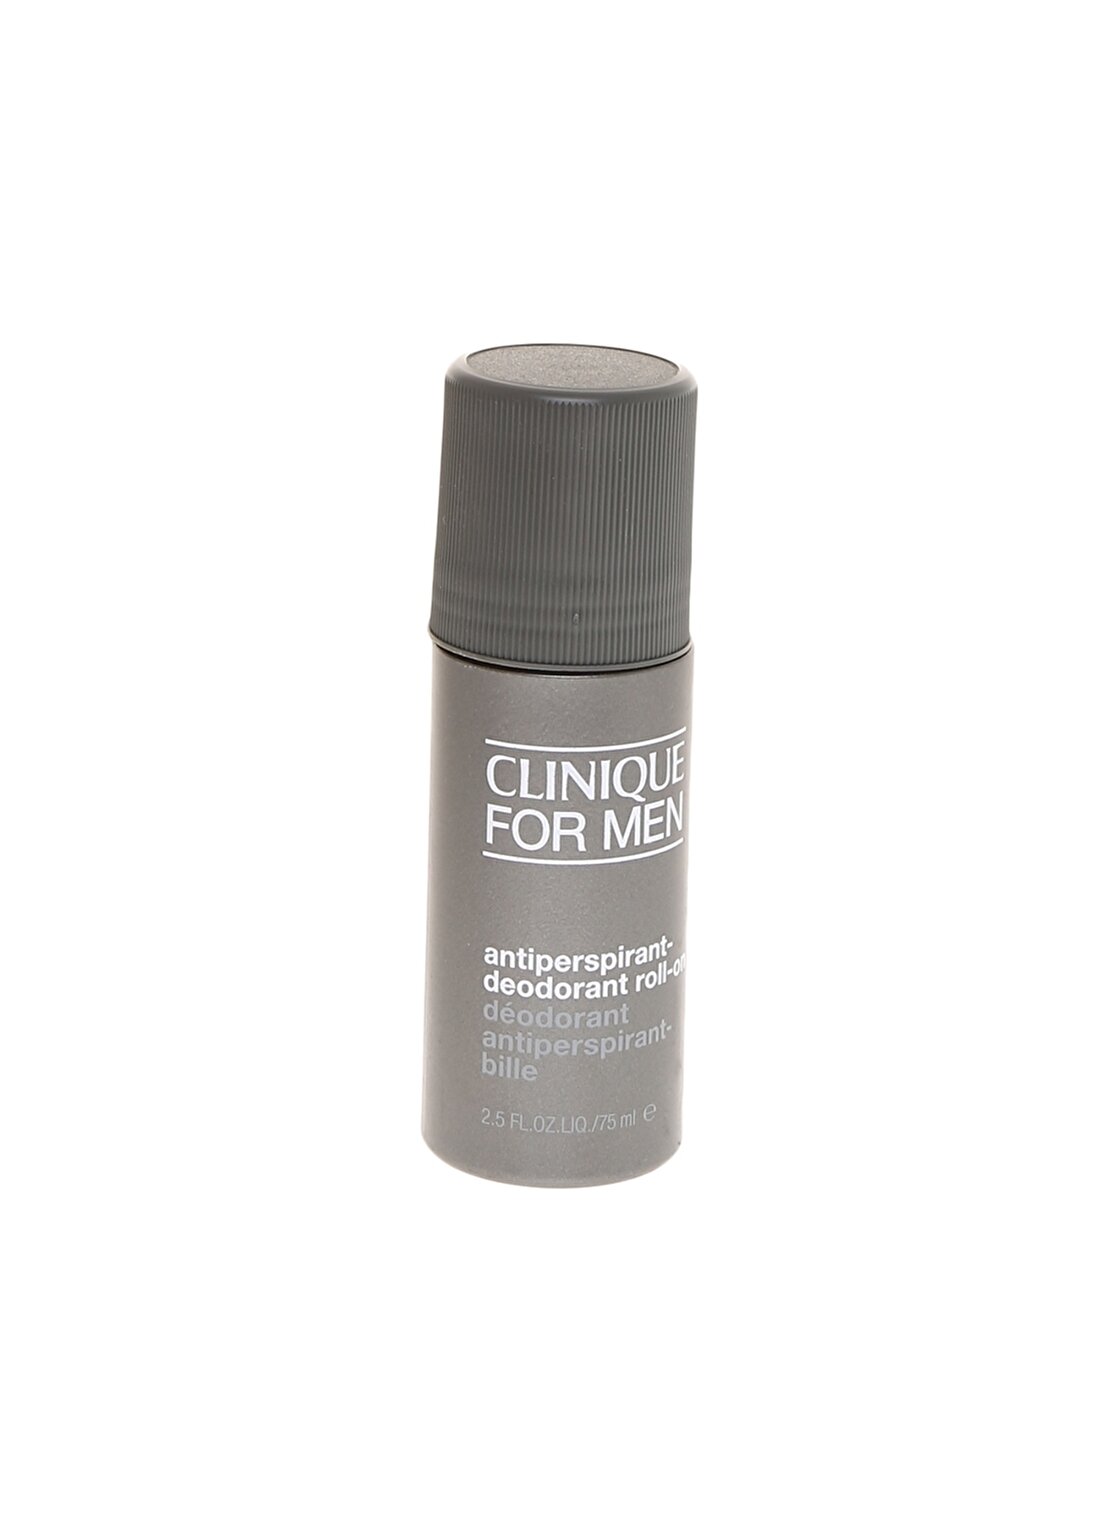 Clinique For Men Roll-On Antiperspirant Deodorant 75Ml/2.5FLOZ